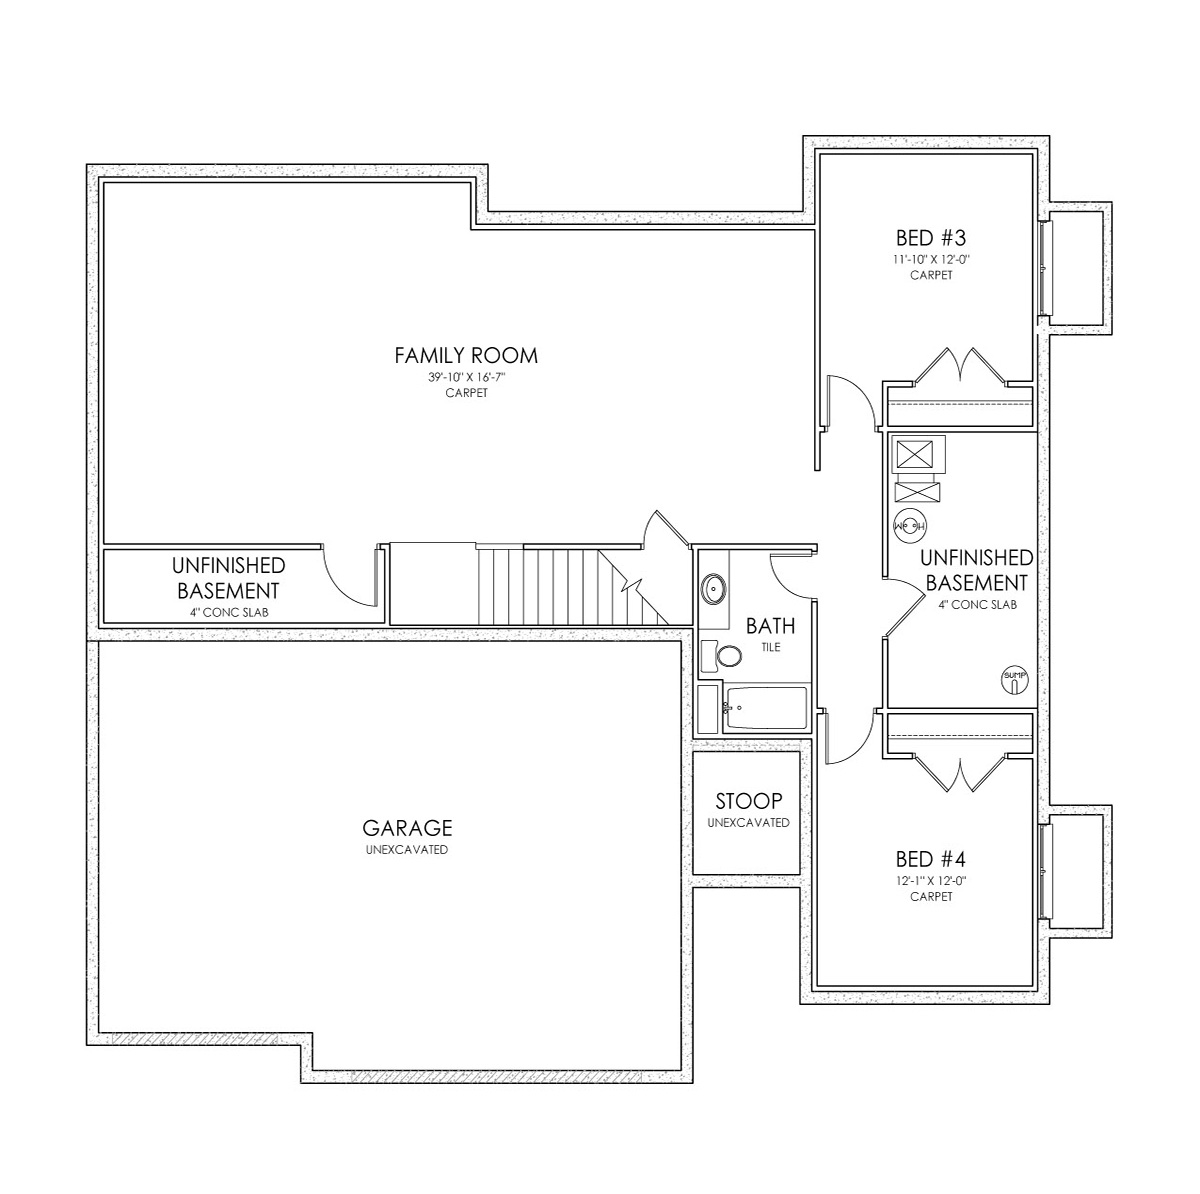 Element Homes floorplan 210 floor level